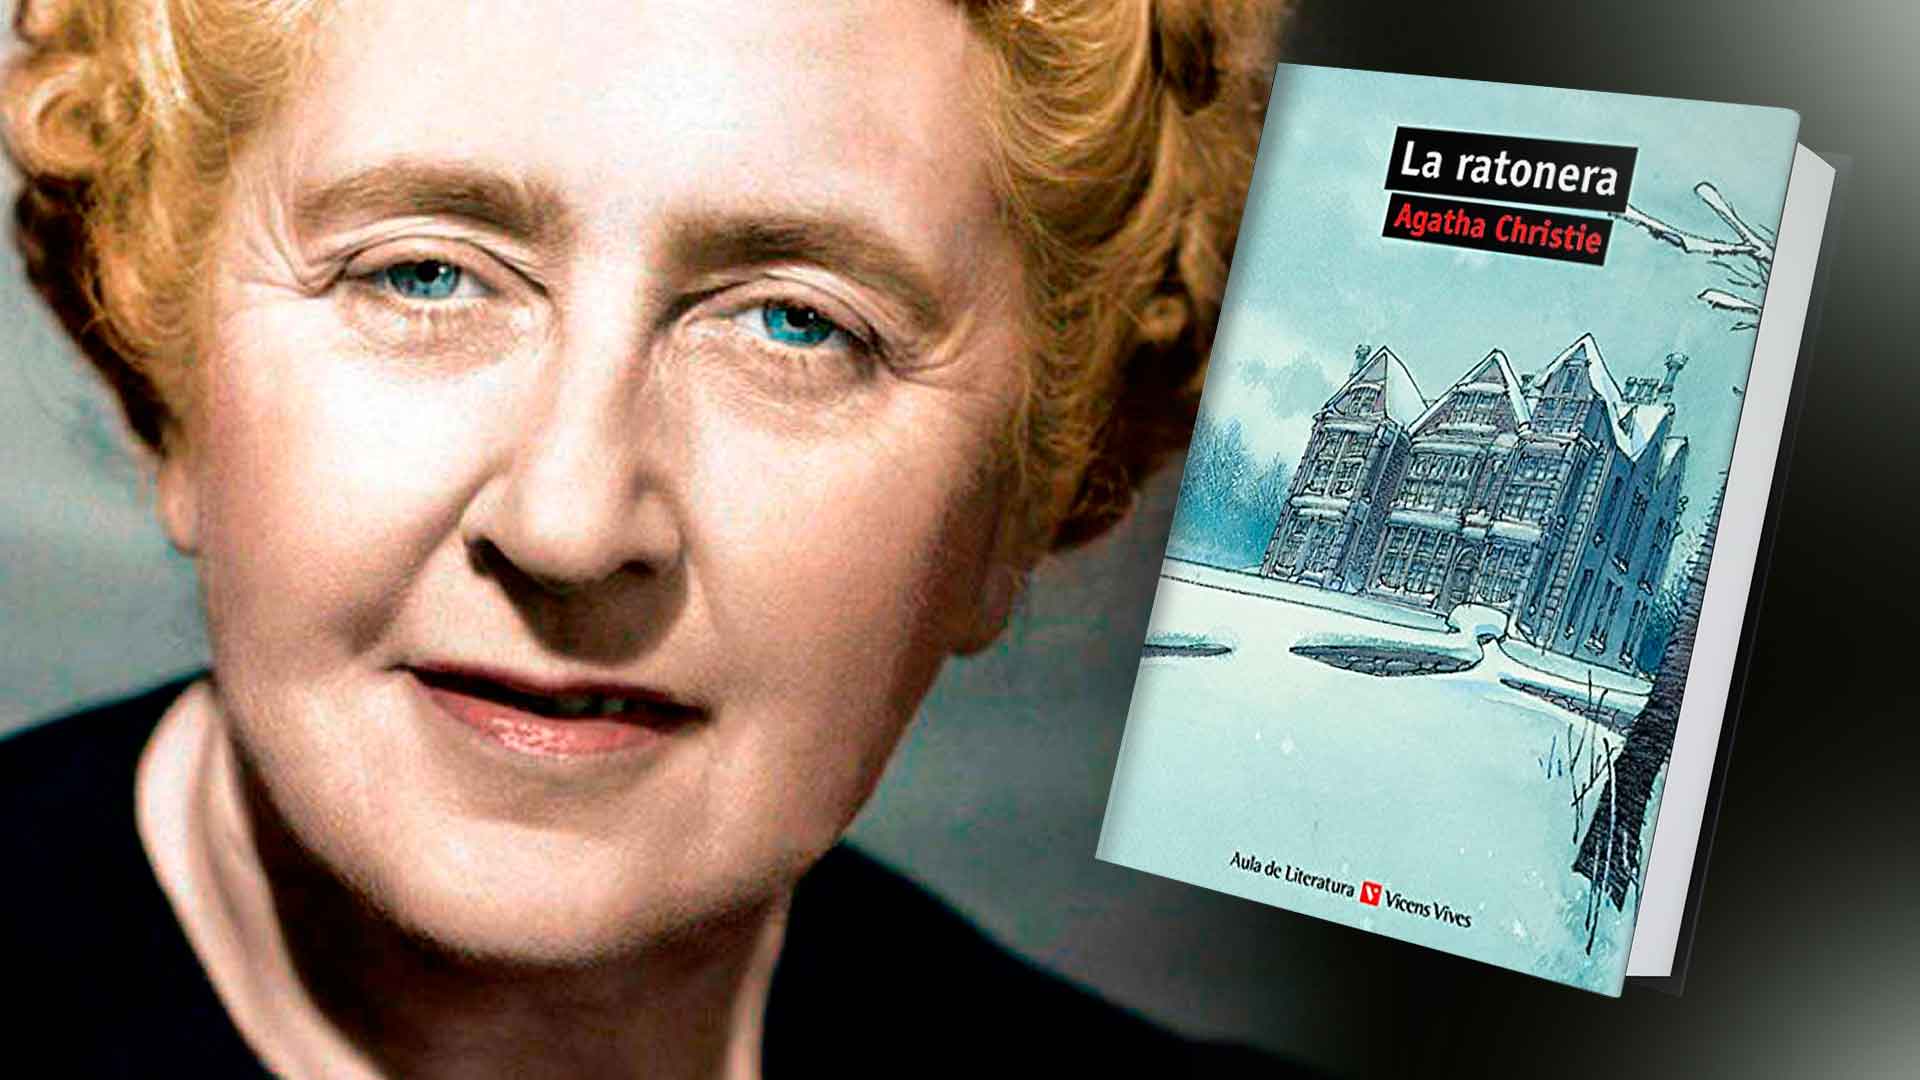 La ratonera de Agatha Christie